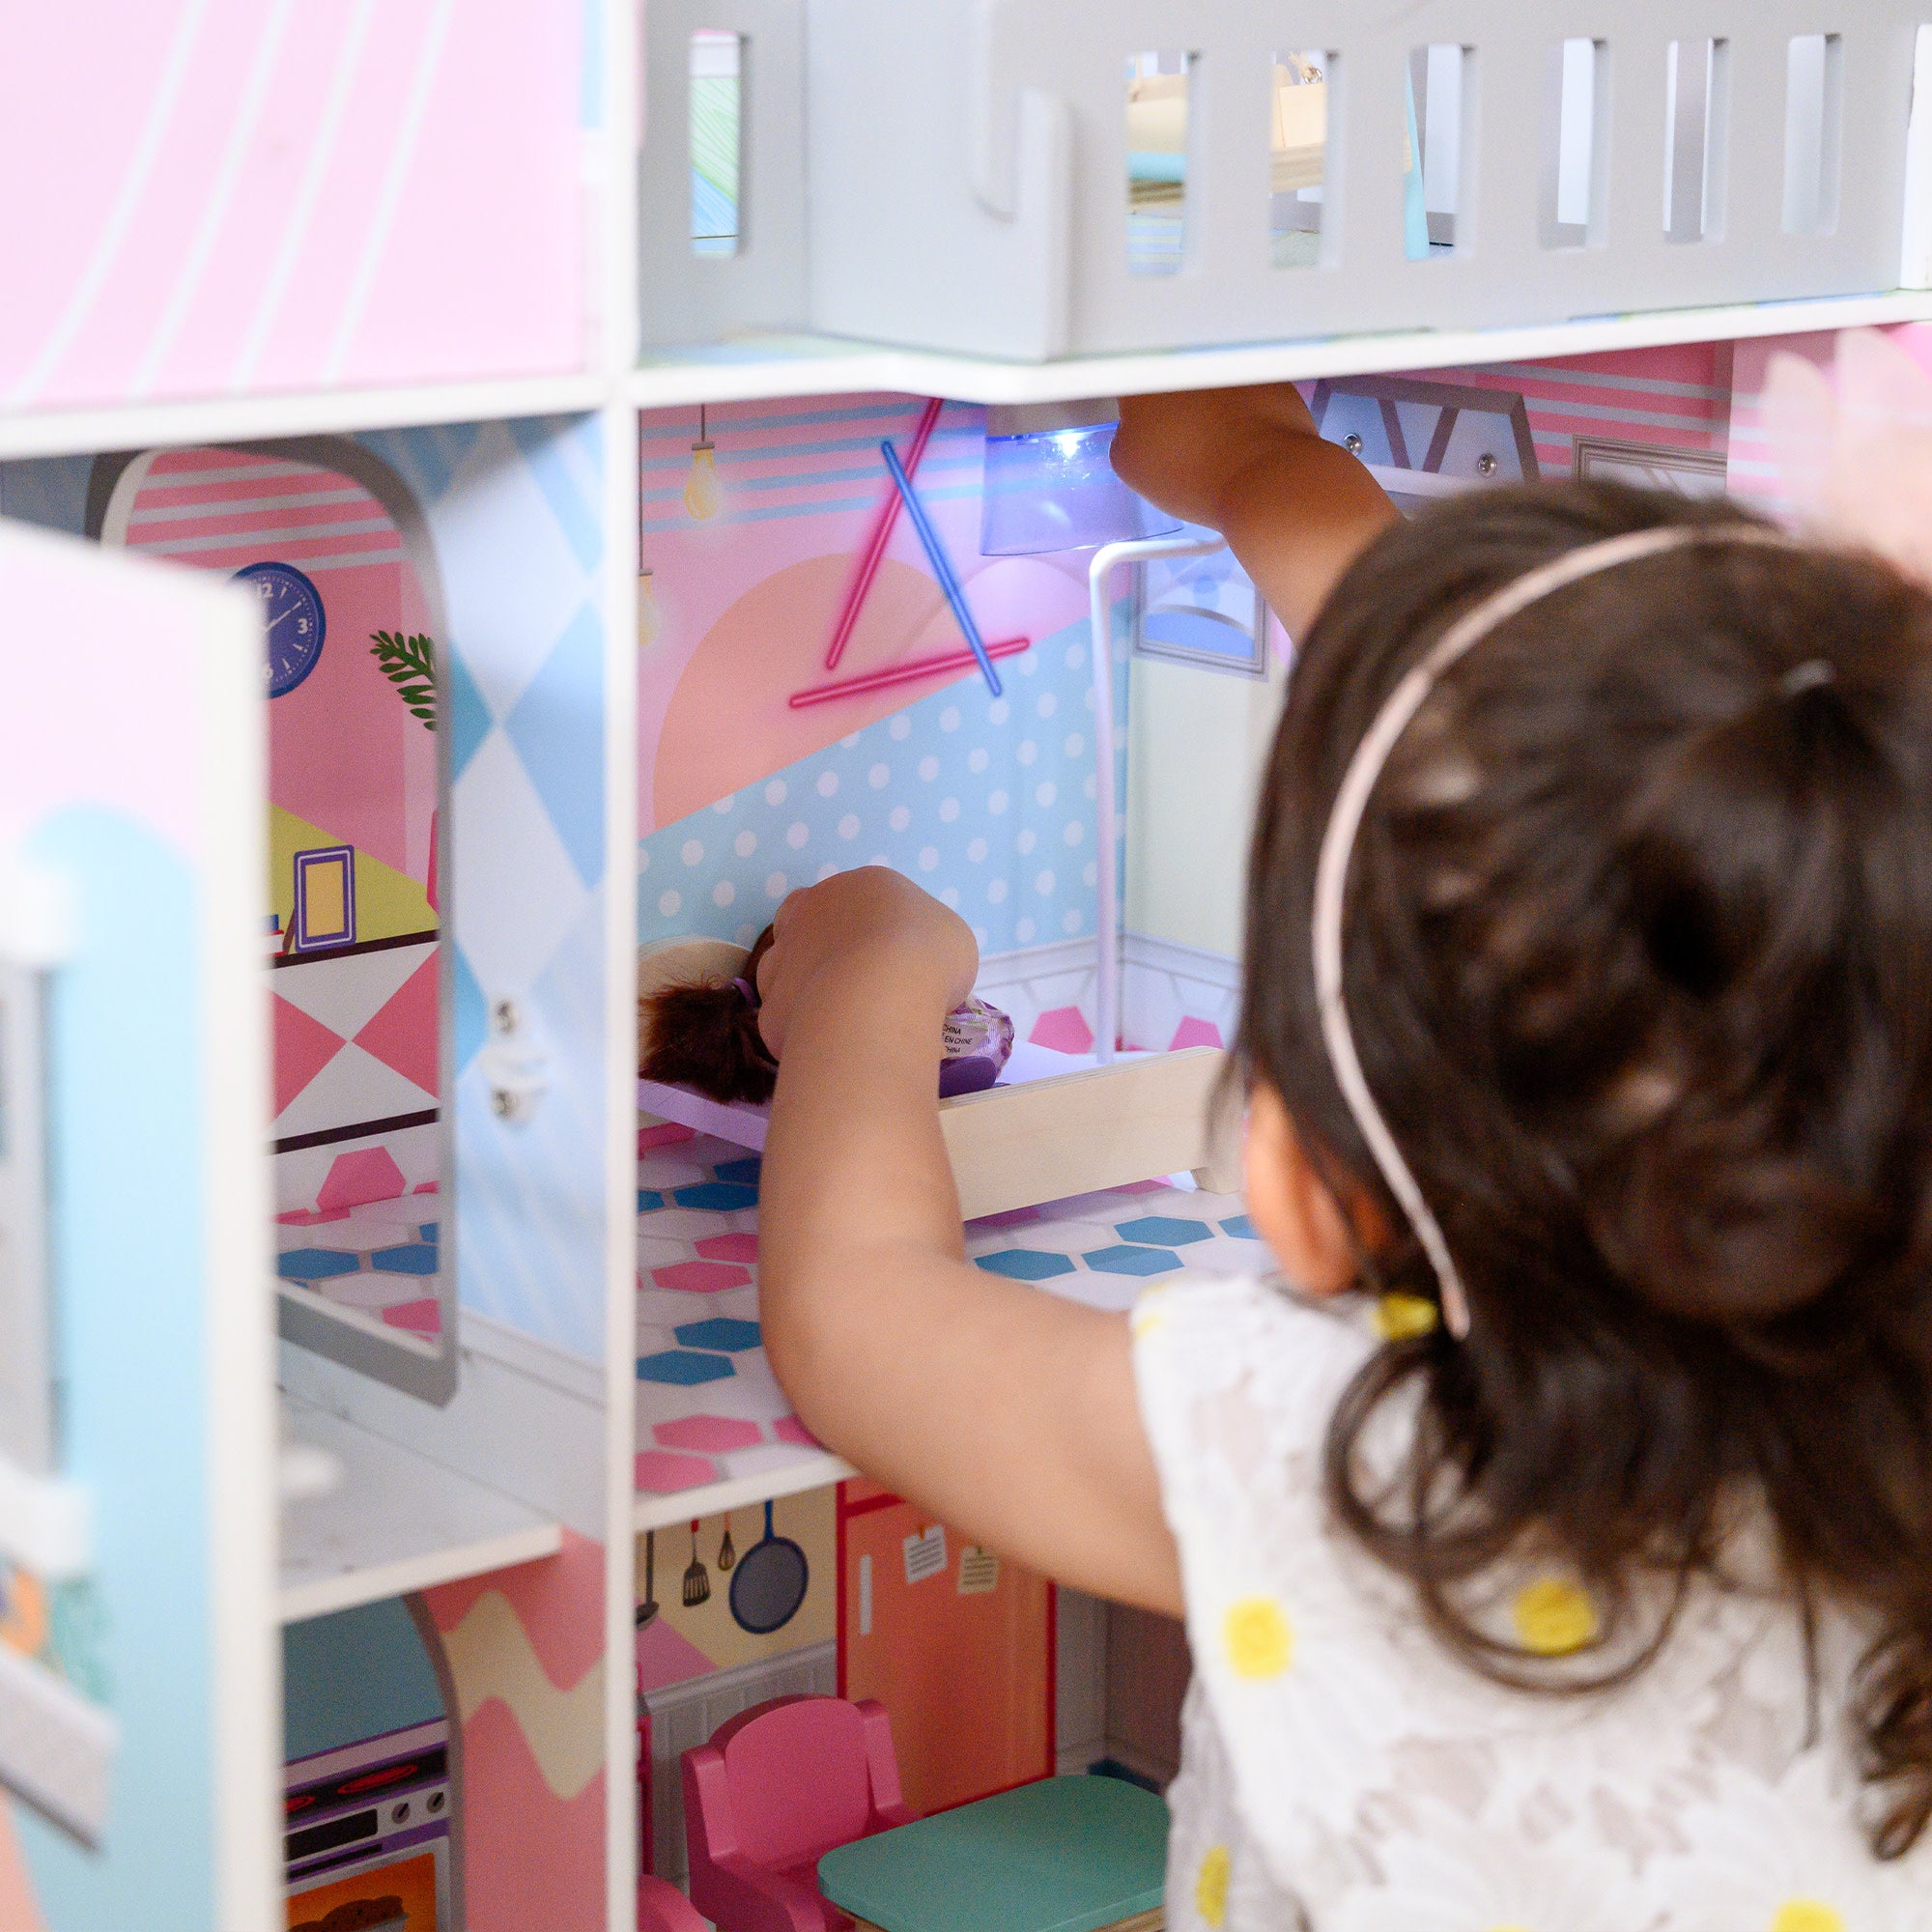 Teamson Kids Sunroom Dollhouse with 11 Accessories, Multicolor